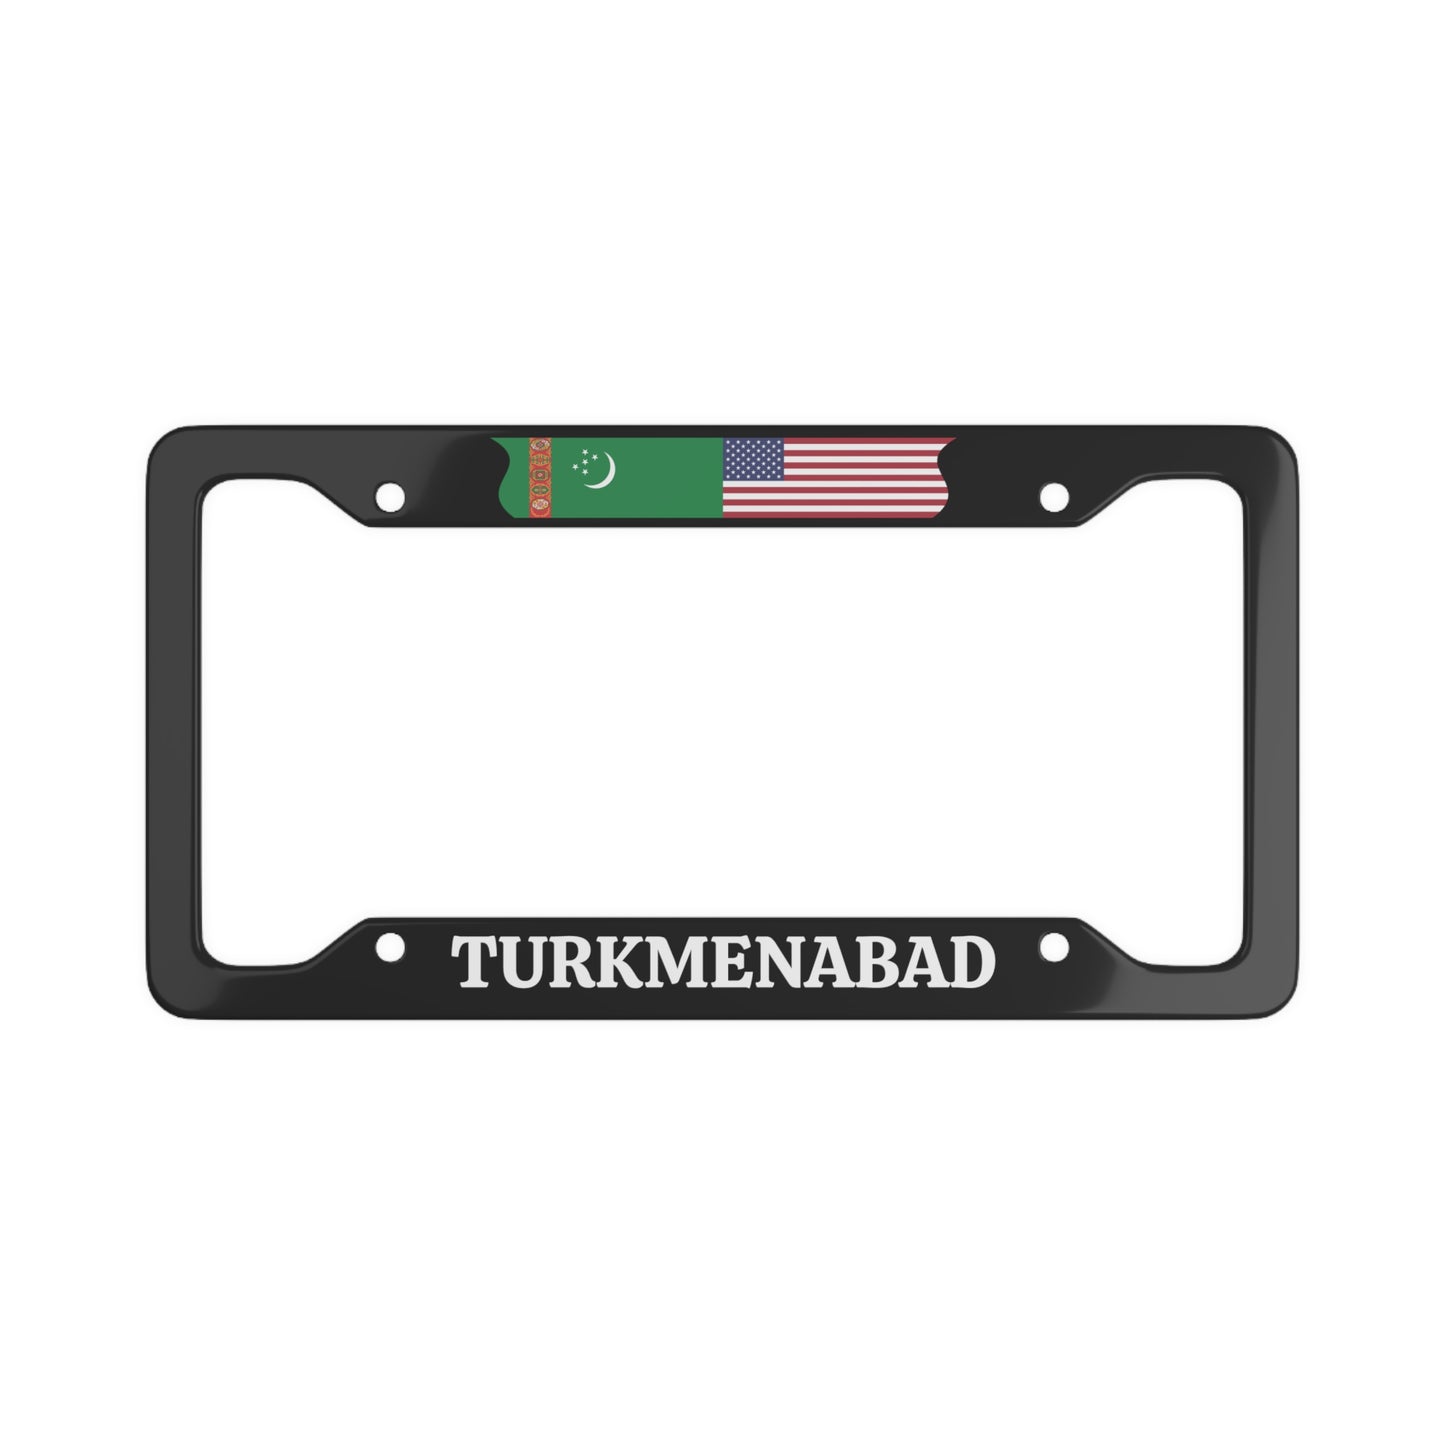 Turkmenabad License Plate Frame